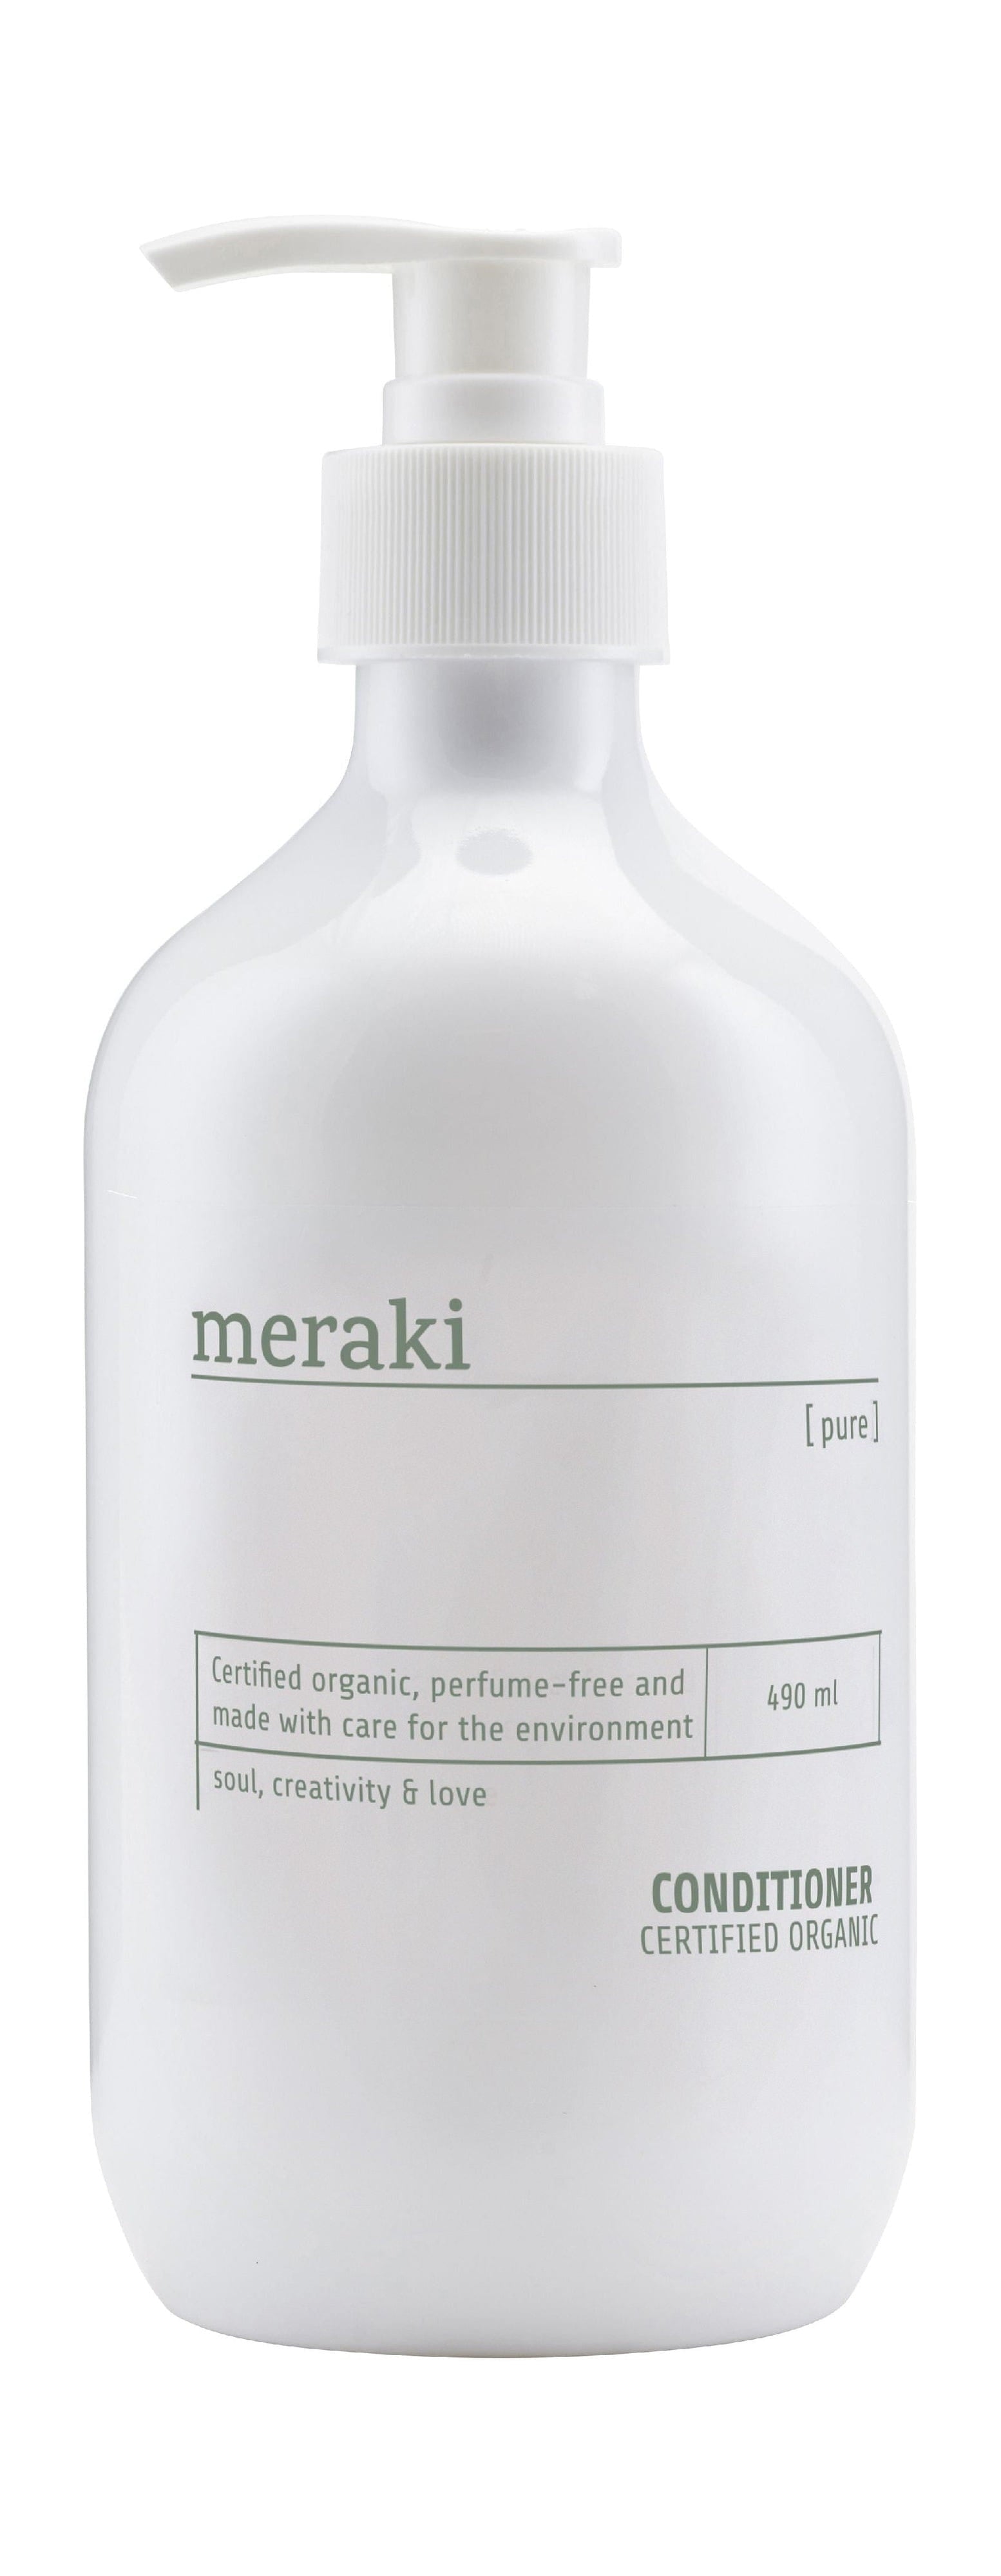 Acondicionador de Meraki 490 ml, puro